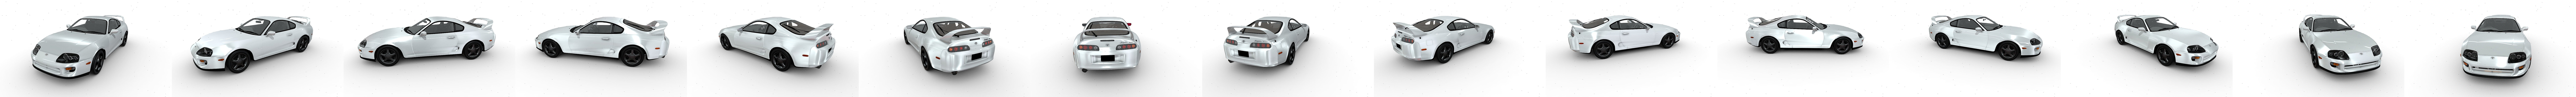 Toyota Supra MK4 Drift Tune - 3D Model by Naudaff3D